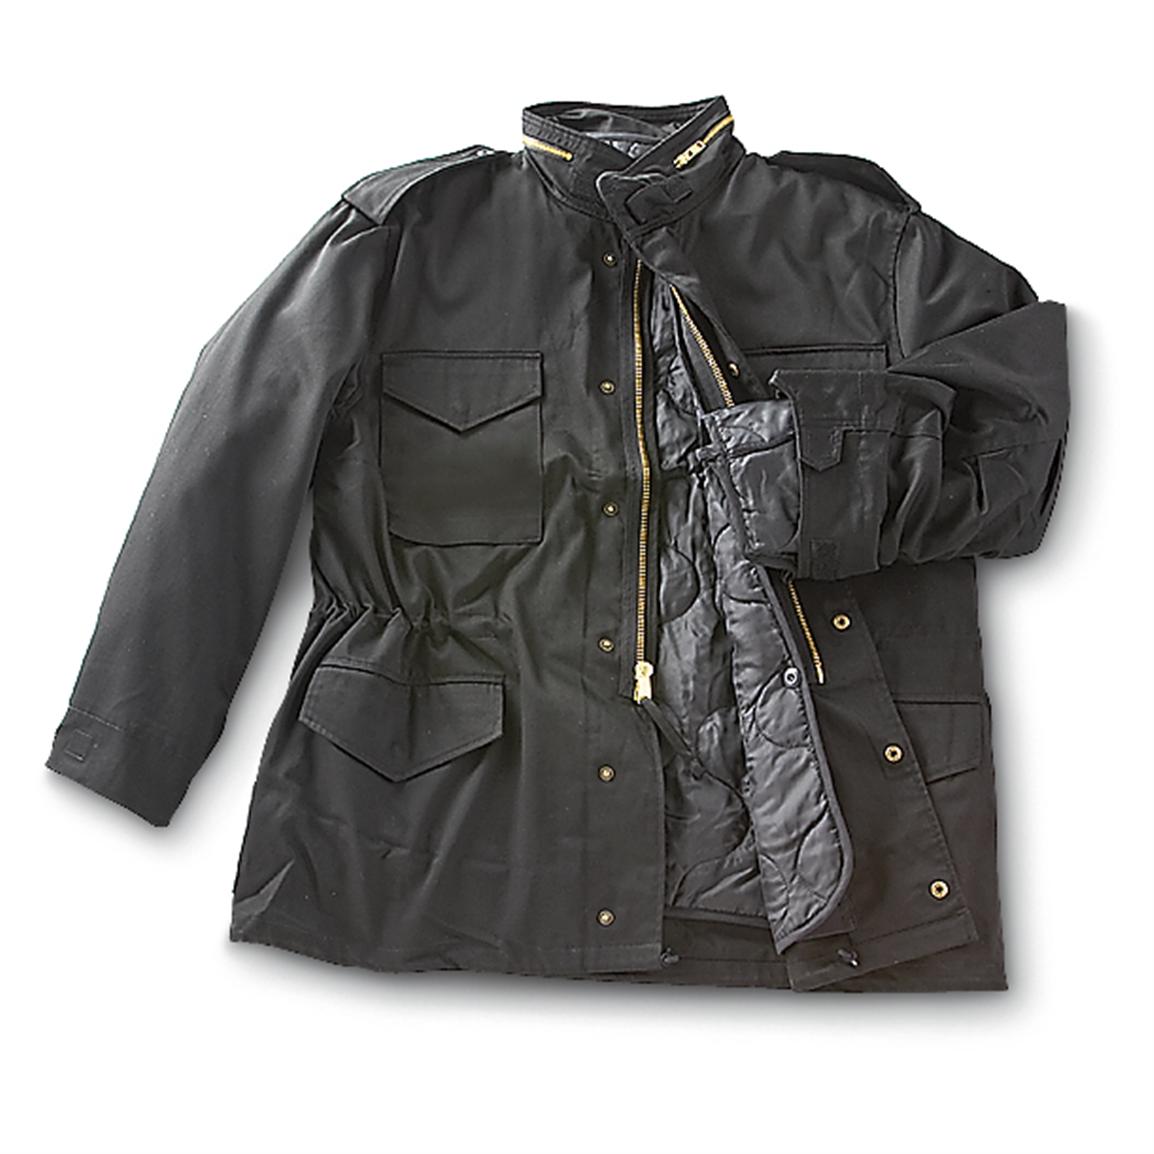 M65 Jacket with BONUS T - shirt - 190935, Insulated Jackets & Coats at ...